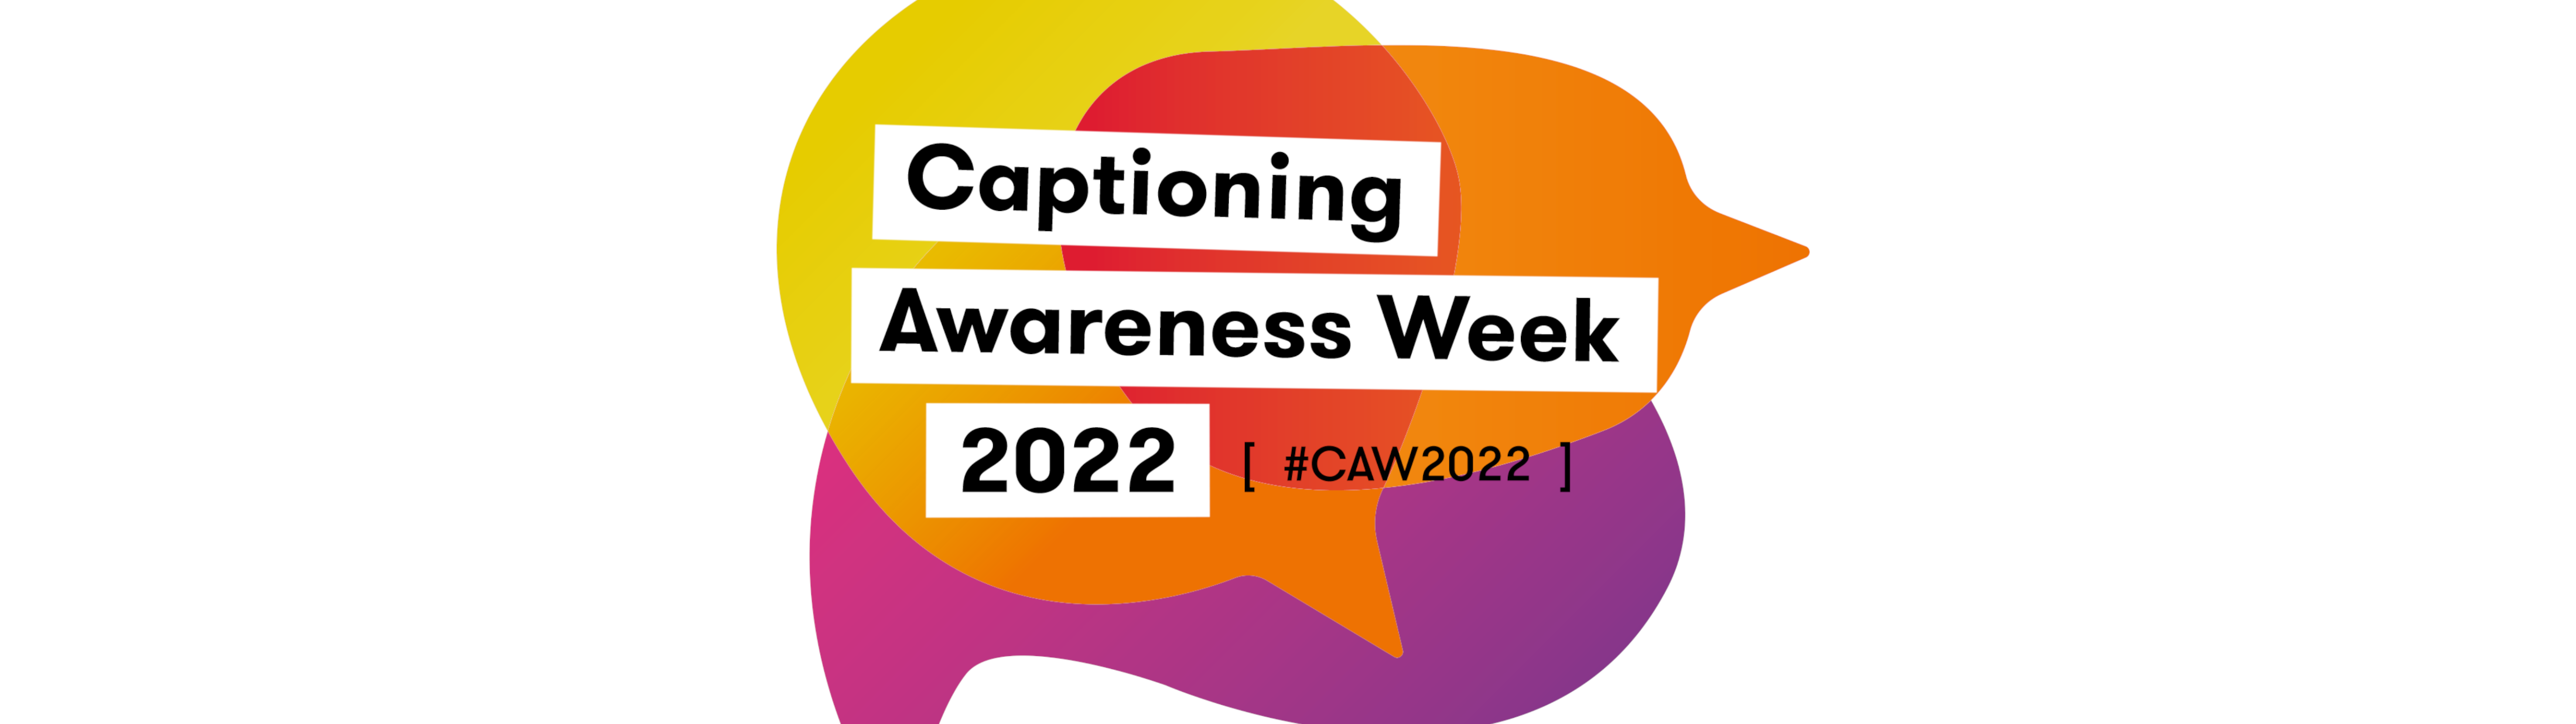 Get Involved this Captioning Awareness Week